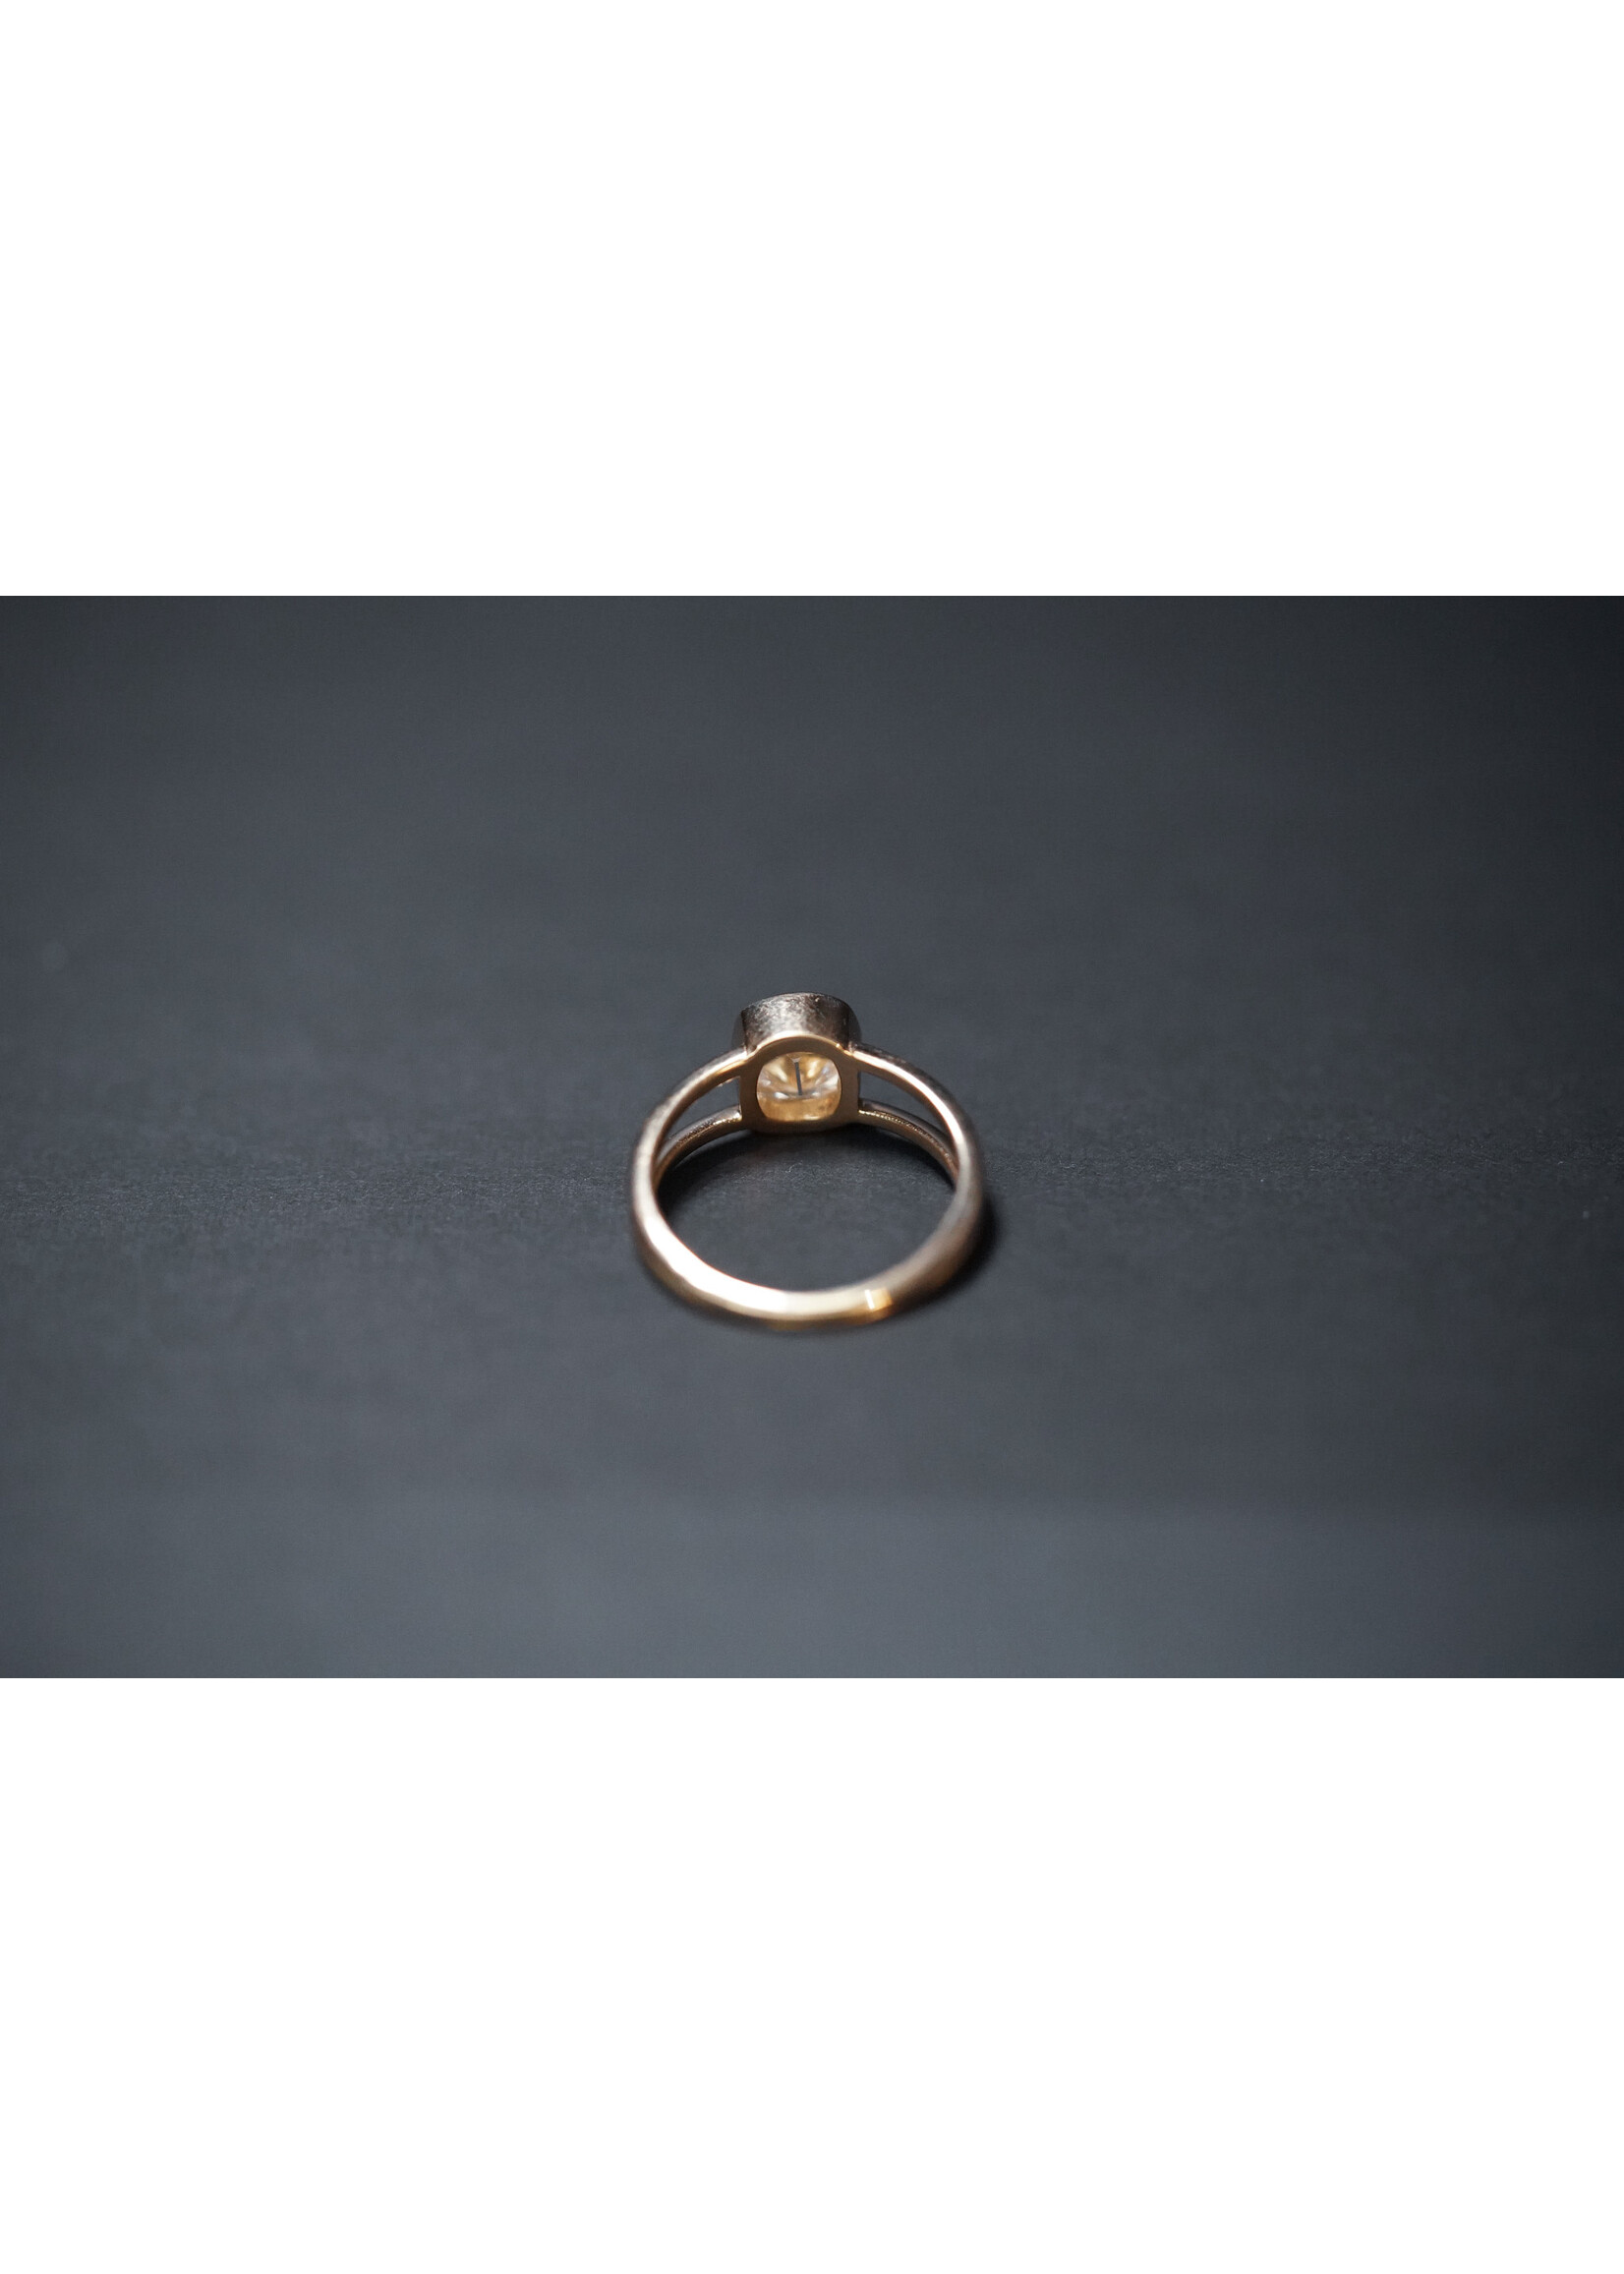 14KY 3.52g 1.51ct H/VS1 GIA Cushion Diamond Ring (size 7)